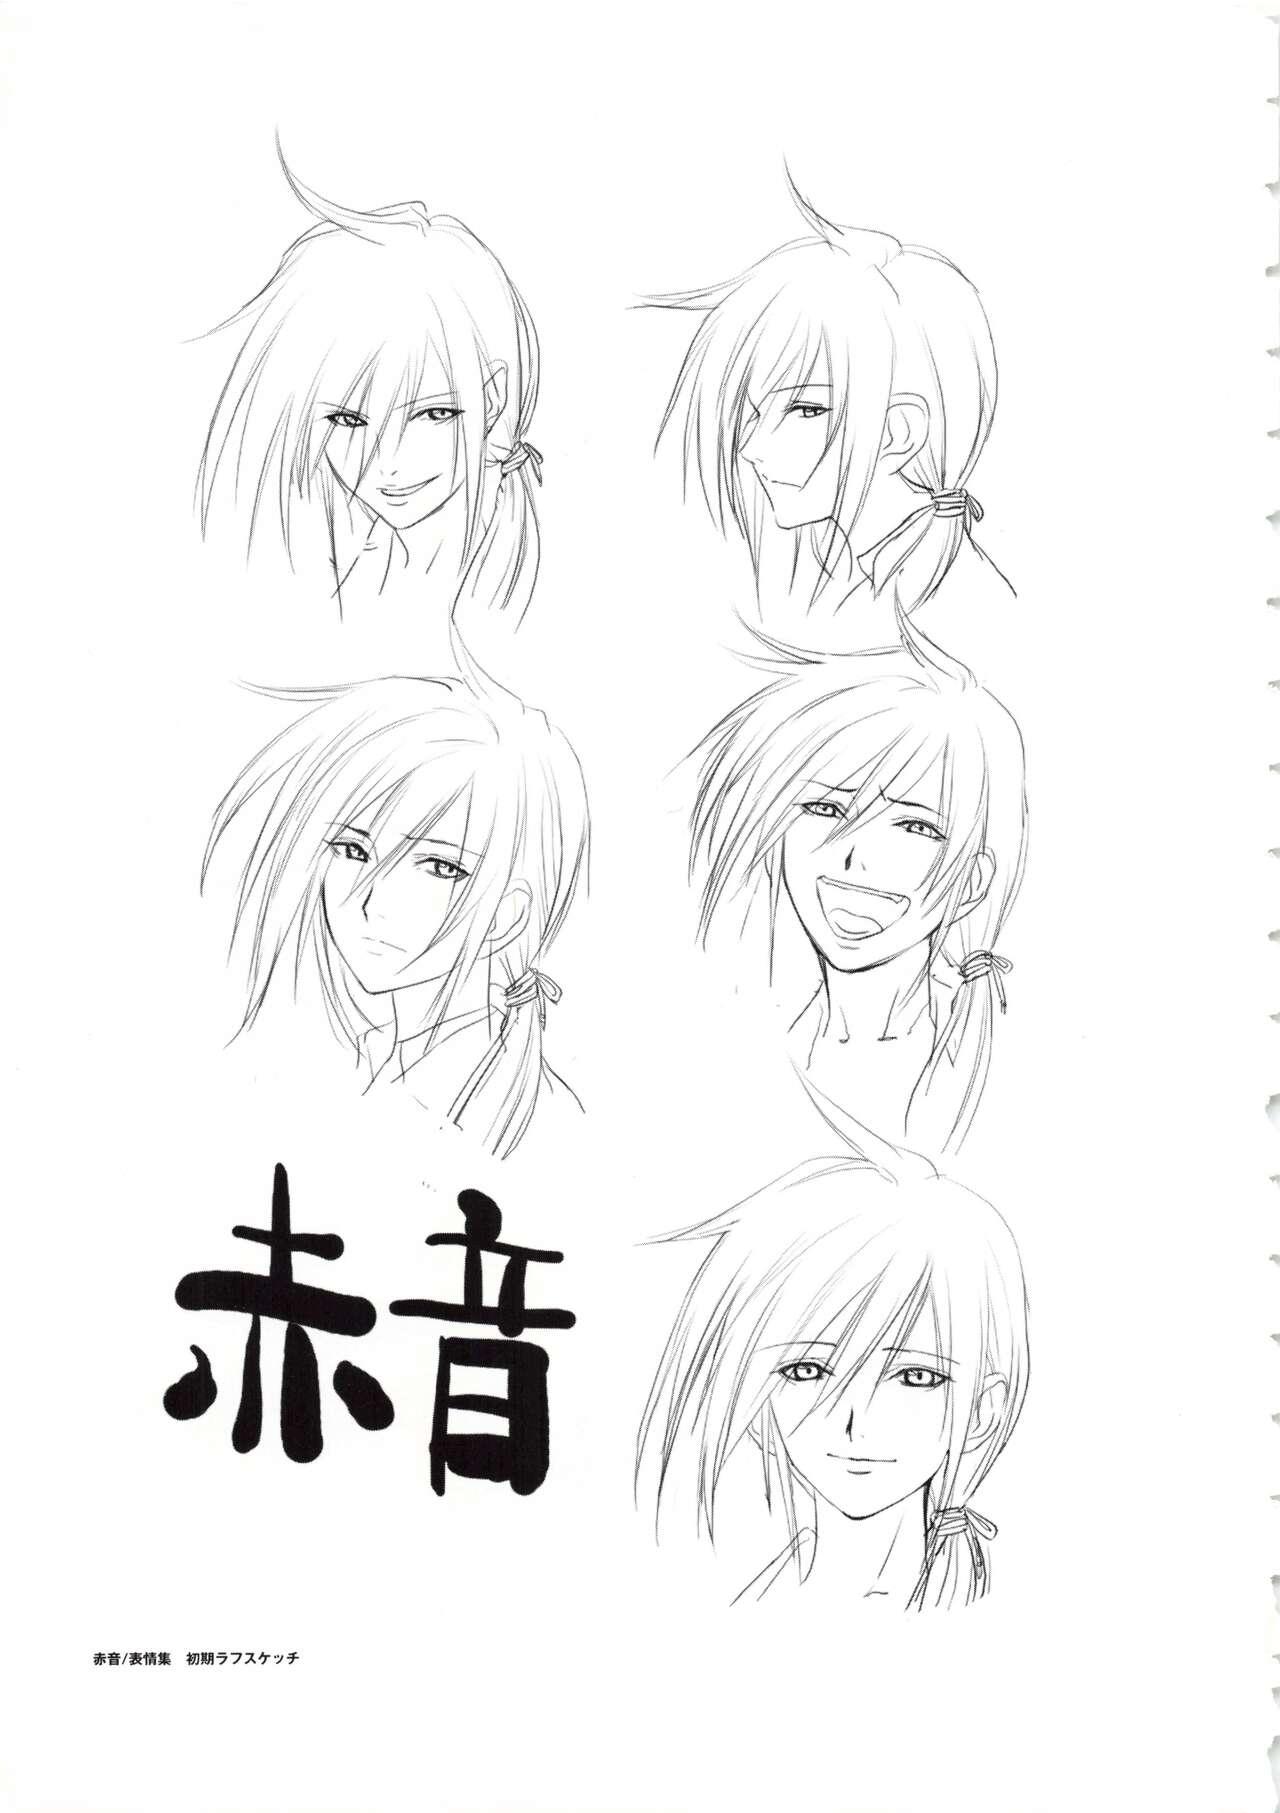 Hanachirasu - Initial Sketches and Unprocessed Illustrations - Selection 6